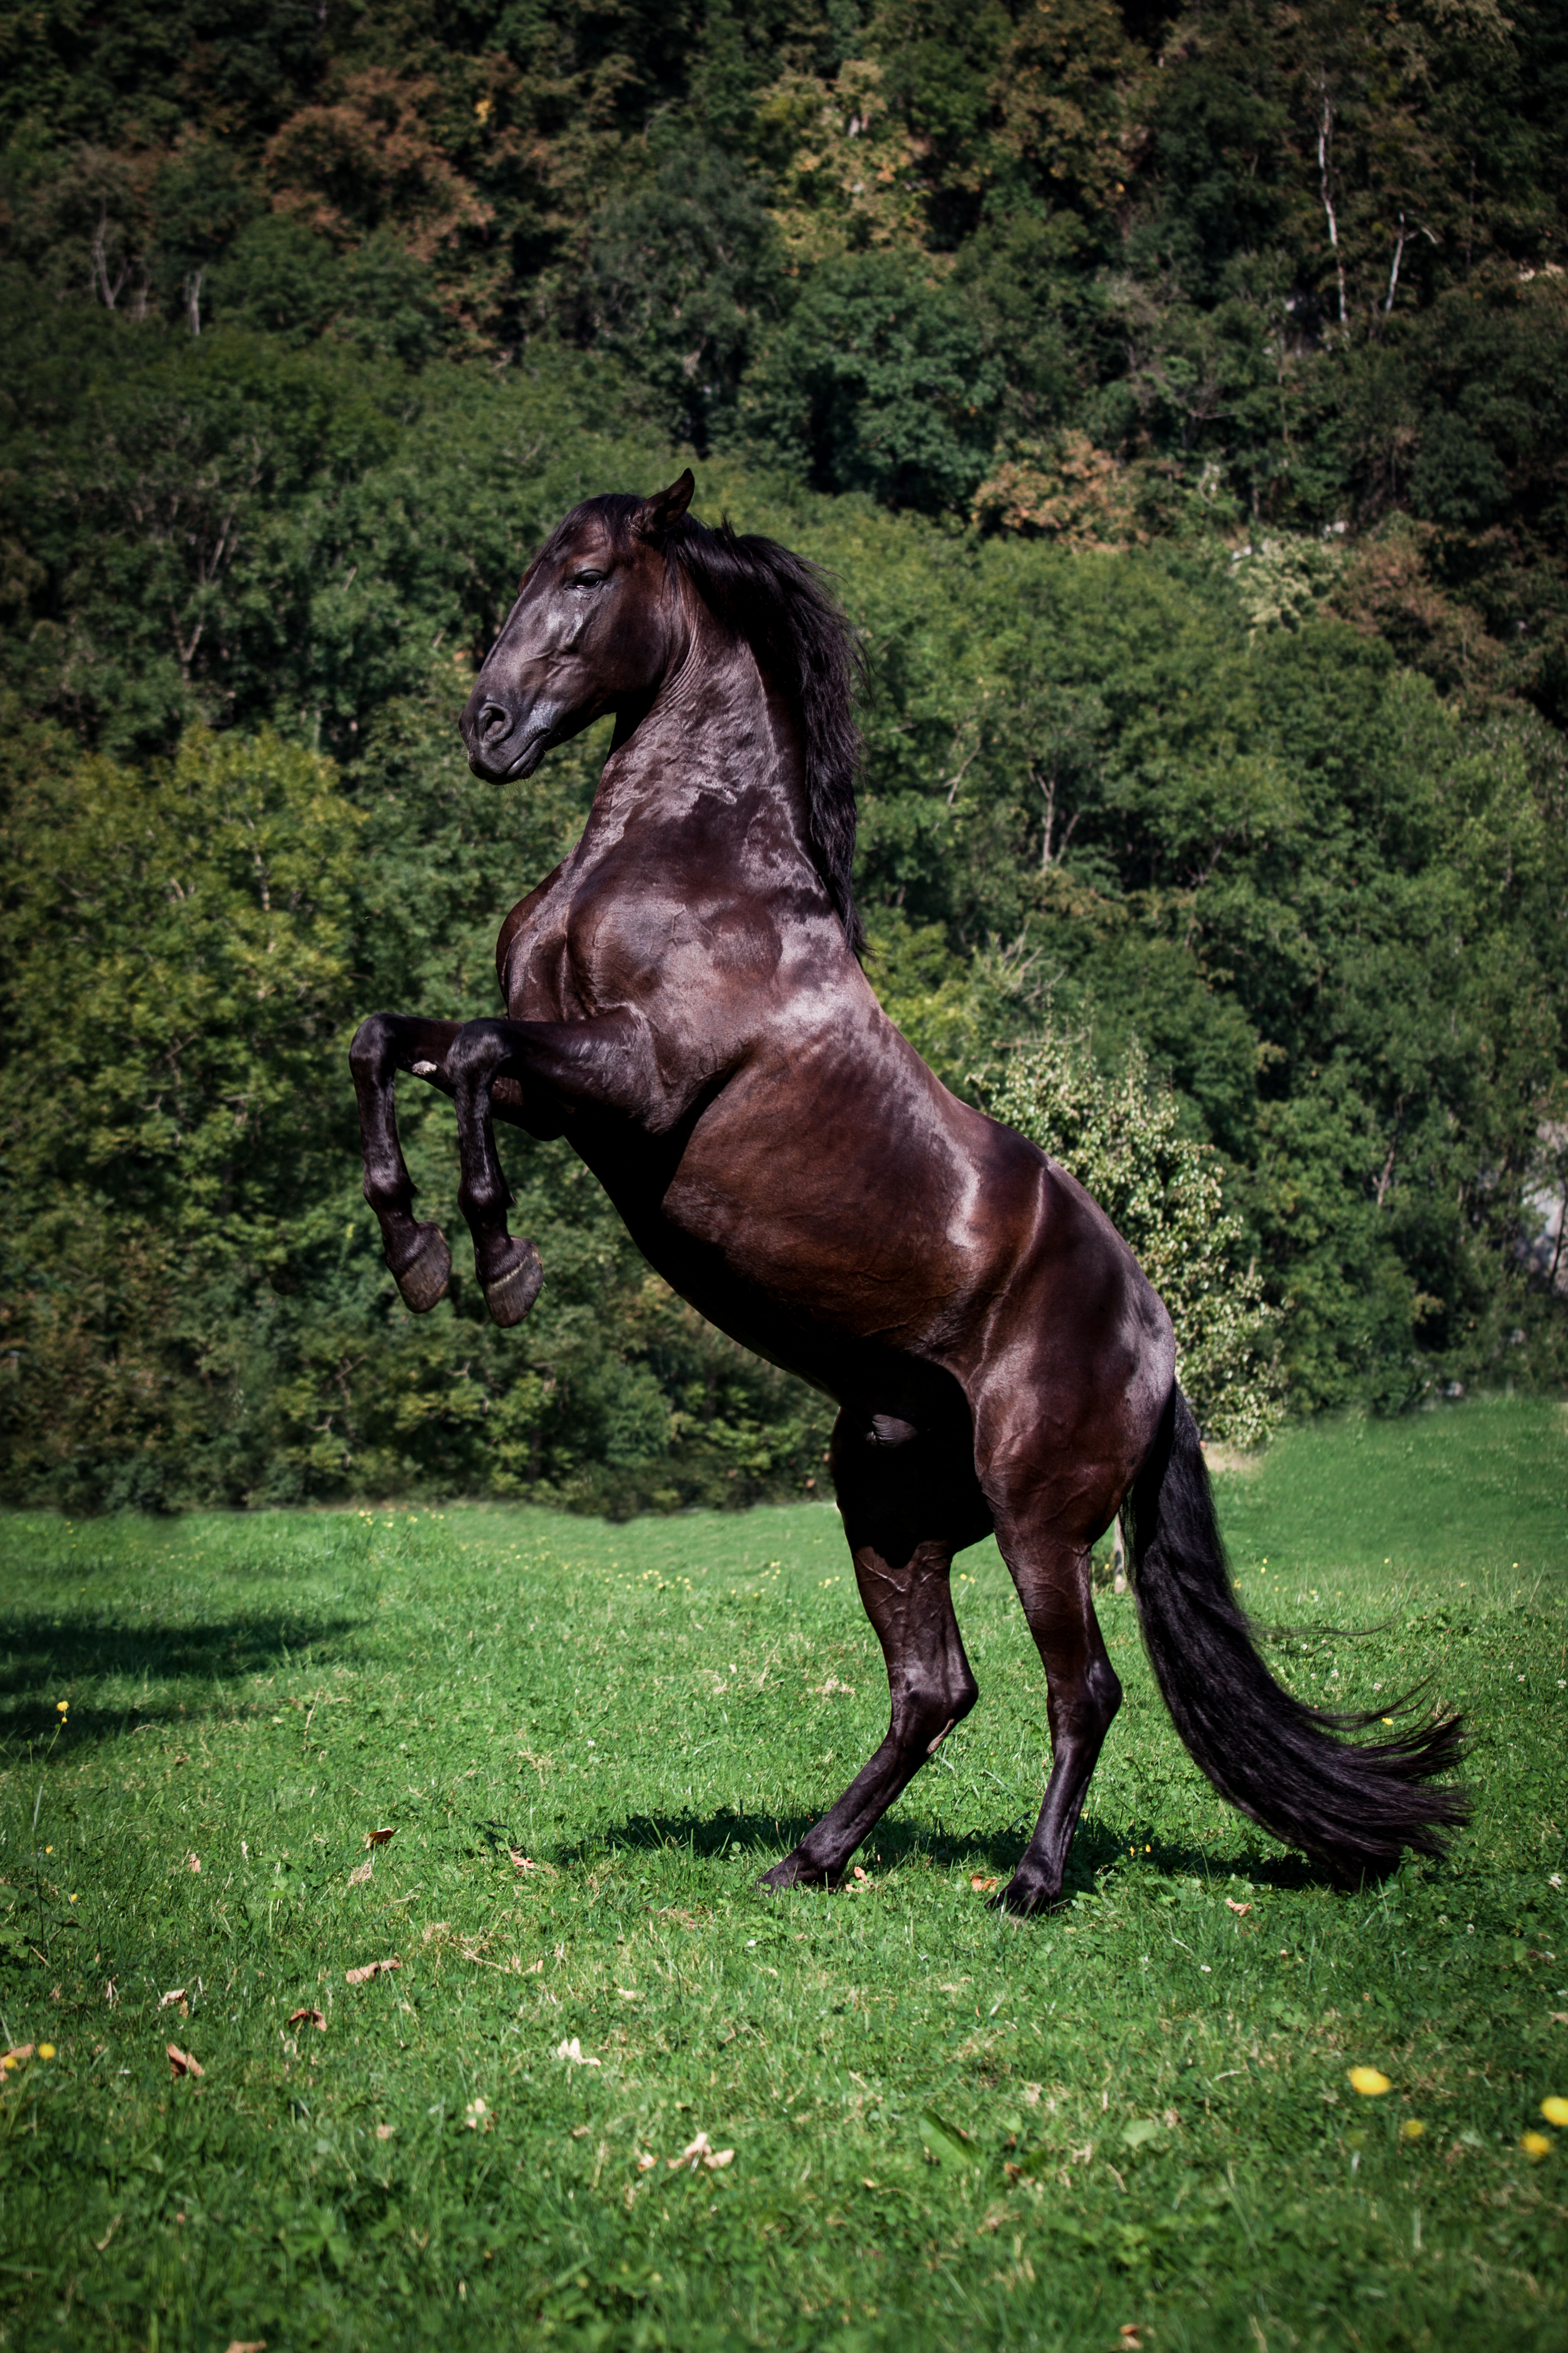 Pferde;Portfolio;Tierfotografie;Tizon;lumo obscura;outdoor